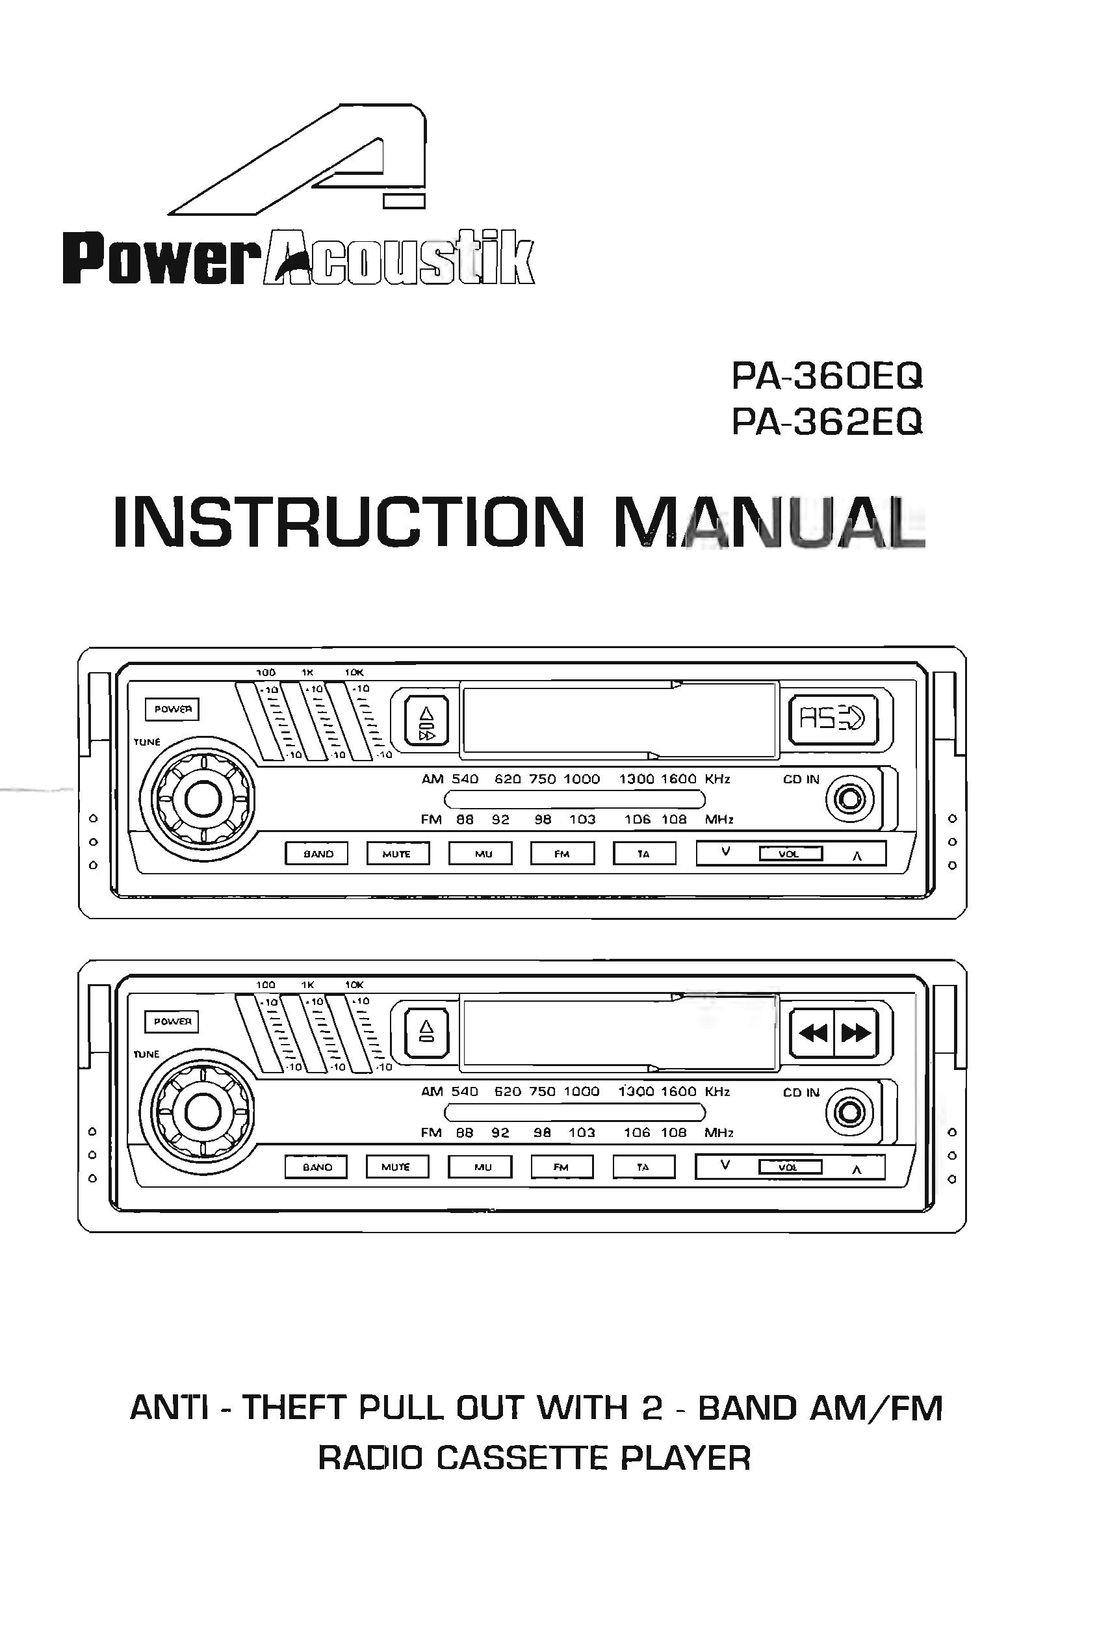 Power Acoustik PA-360EQ Car Stereo System User Manual